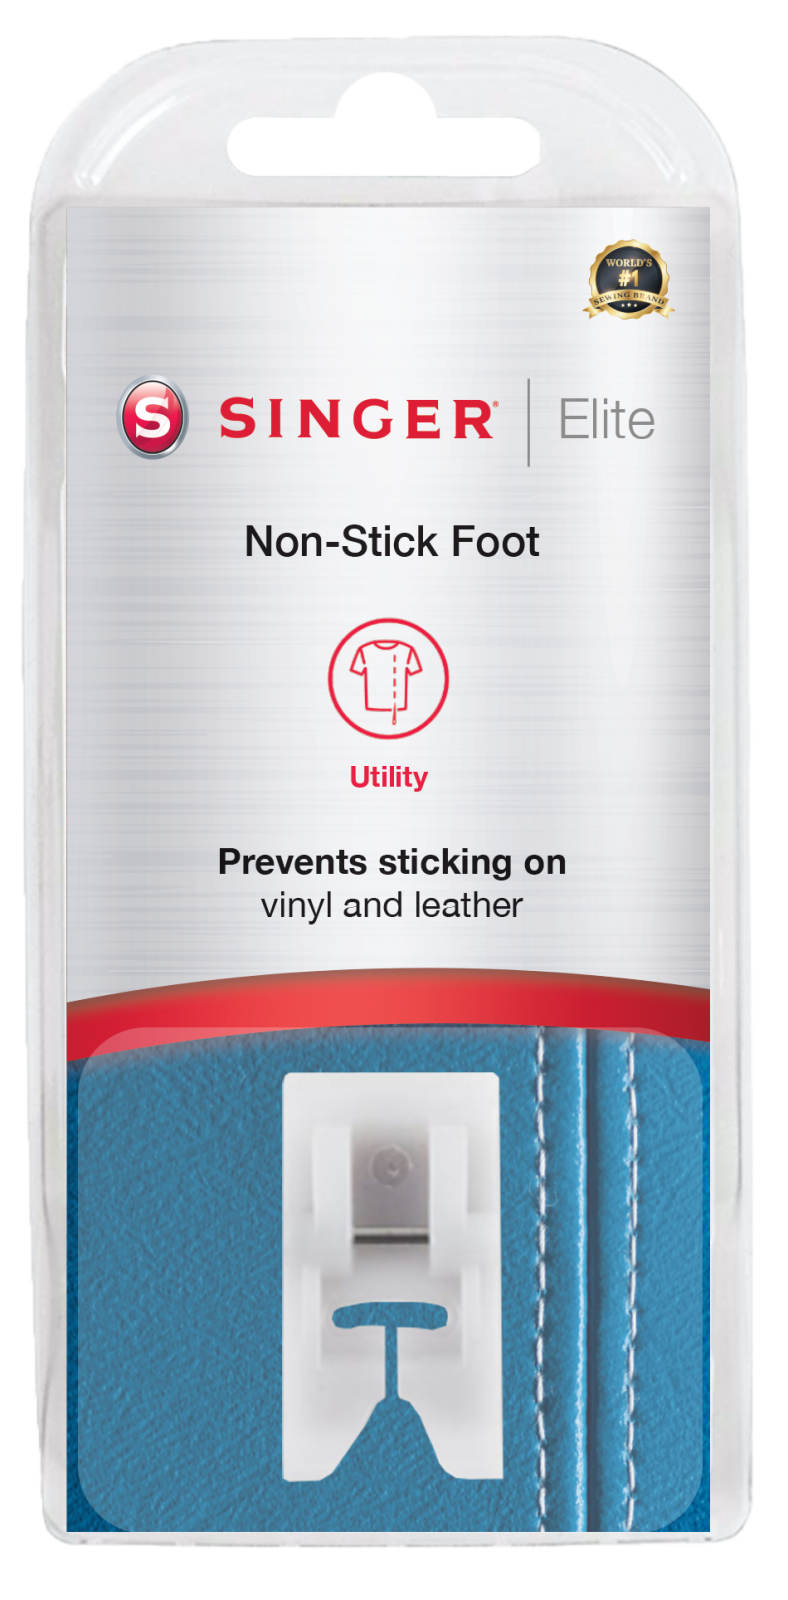 Singer Elite Non-Stick Foot